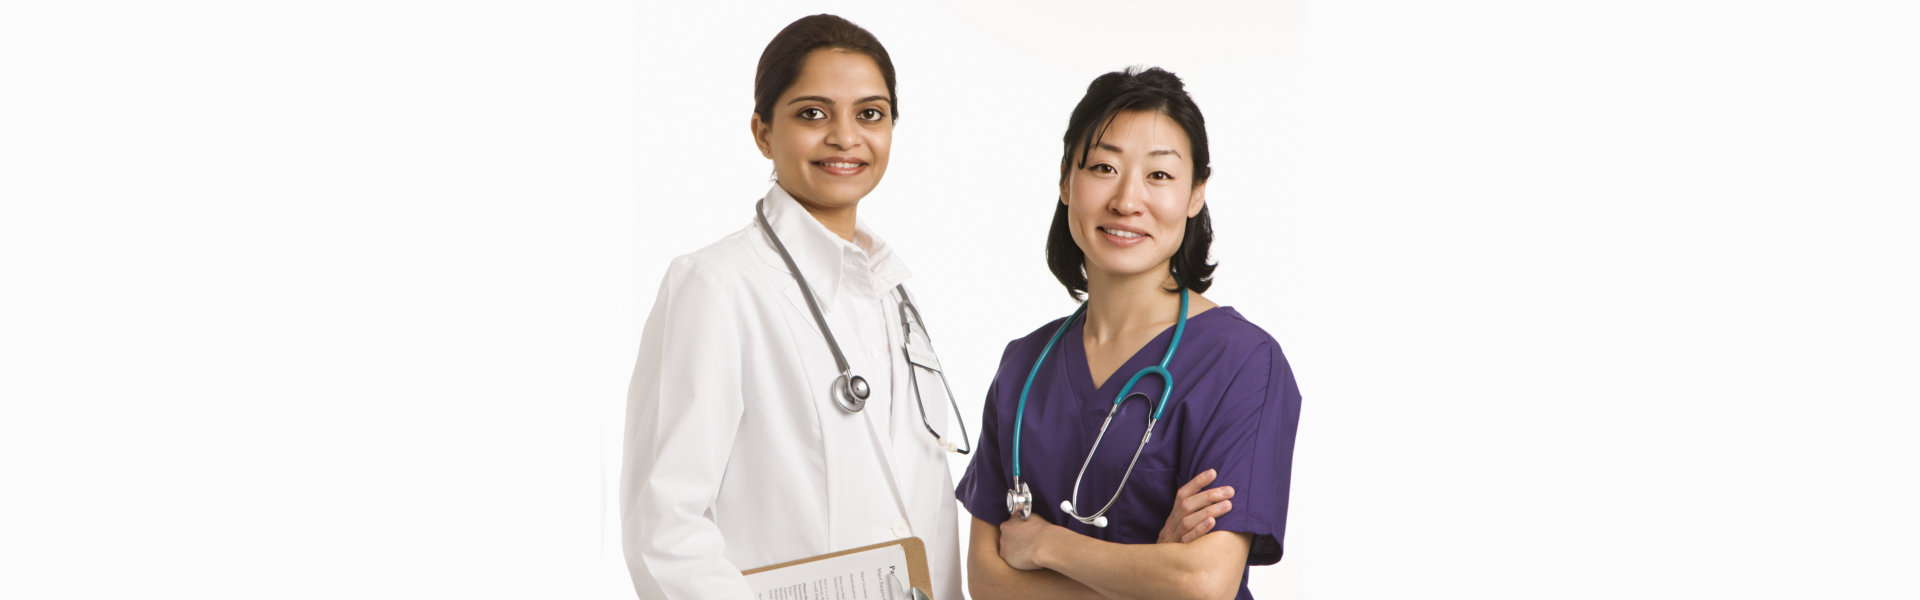 a couple of women wearing medical scrubs